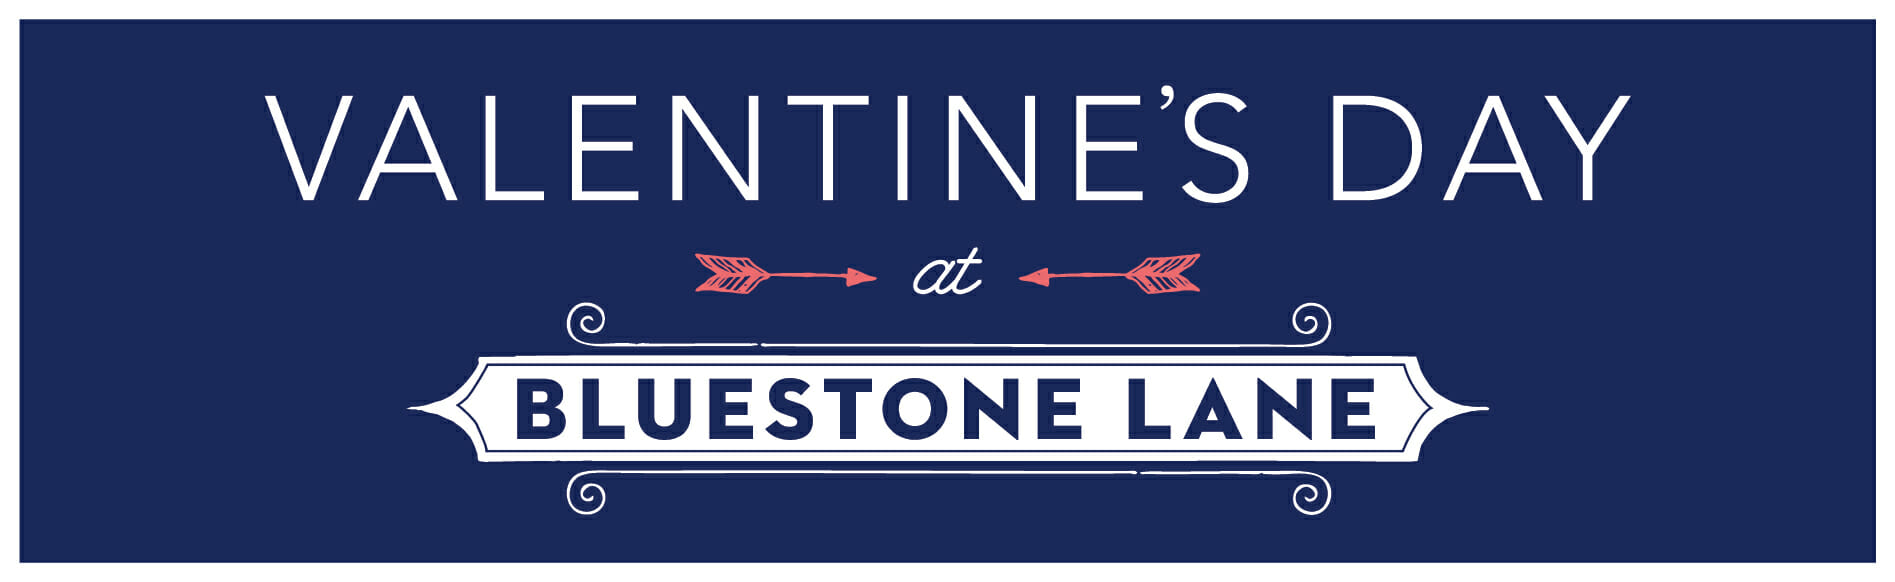 Bluestone Lane Valentine's Day